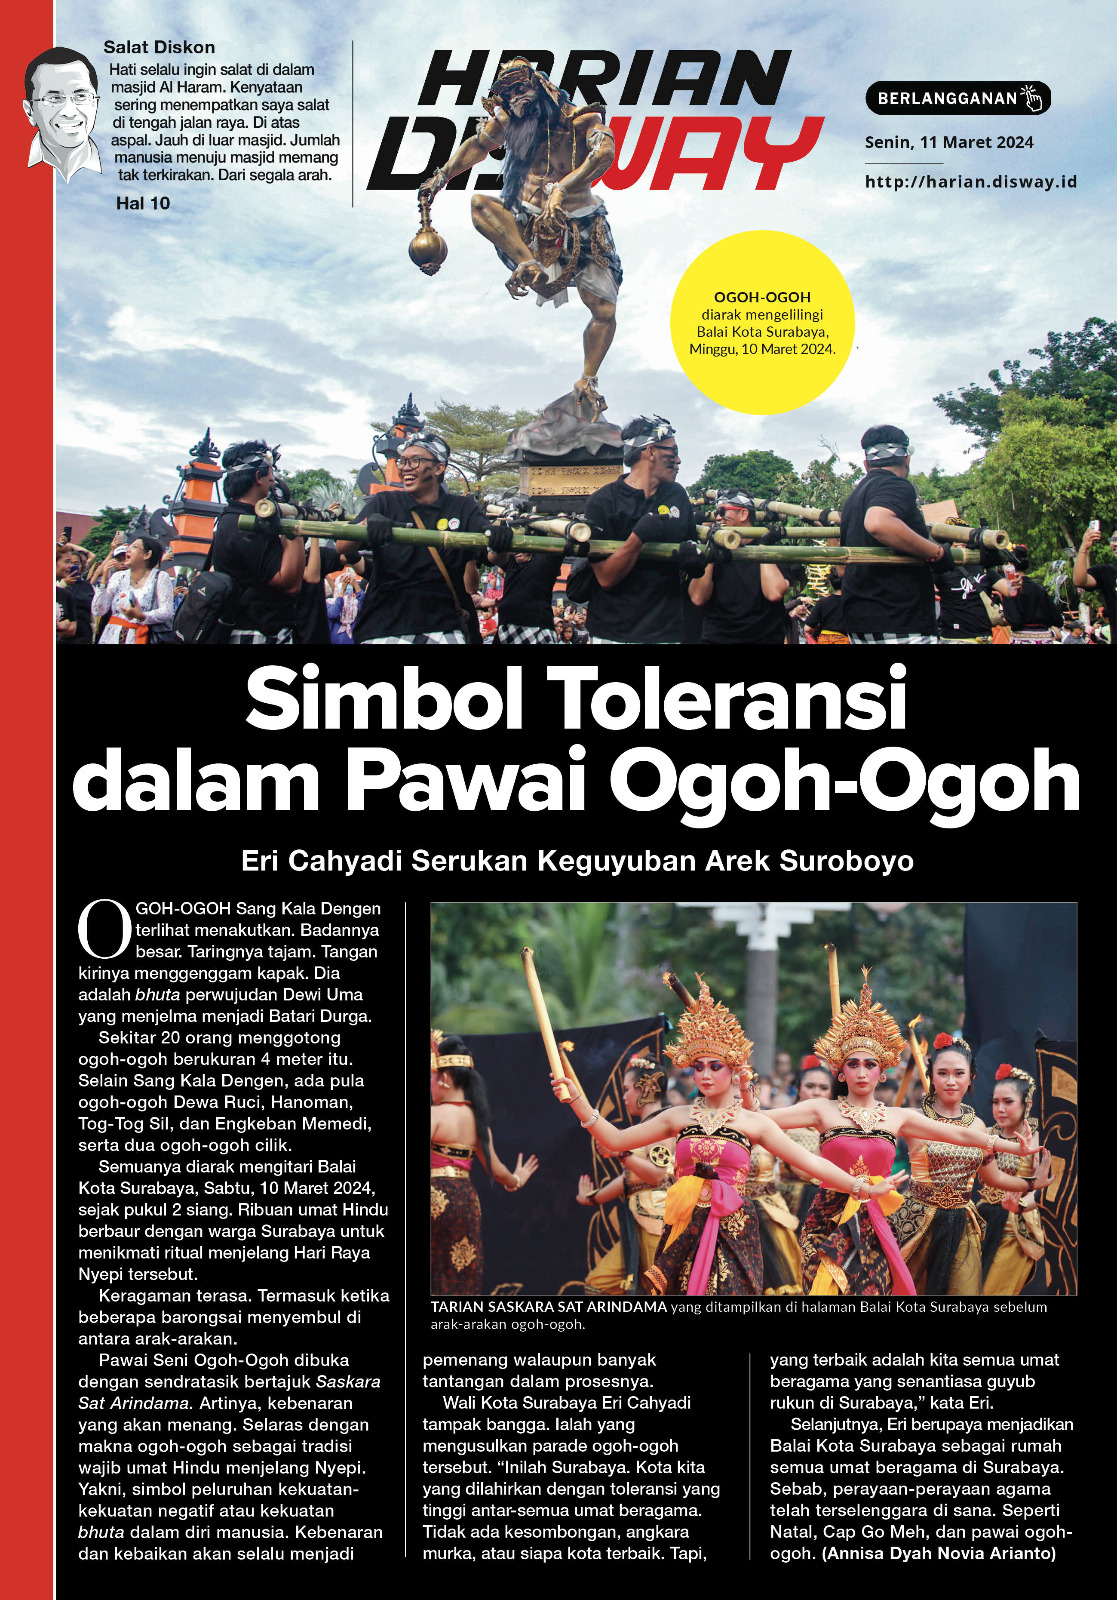 Simbol Toleransi dalam Pawai Ogoh-Ogoh